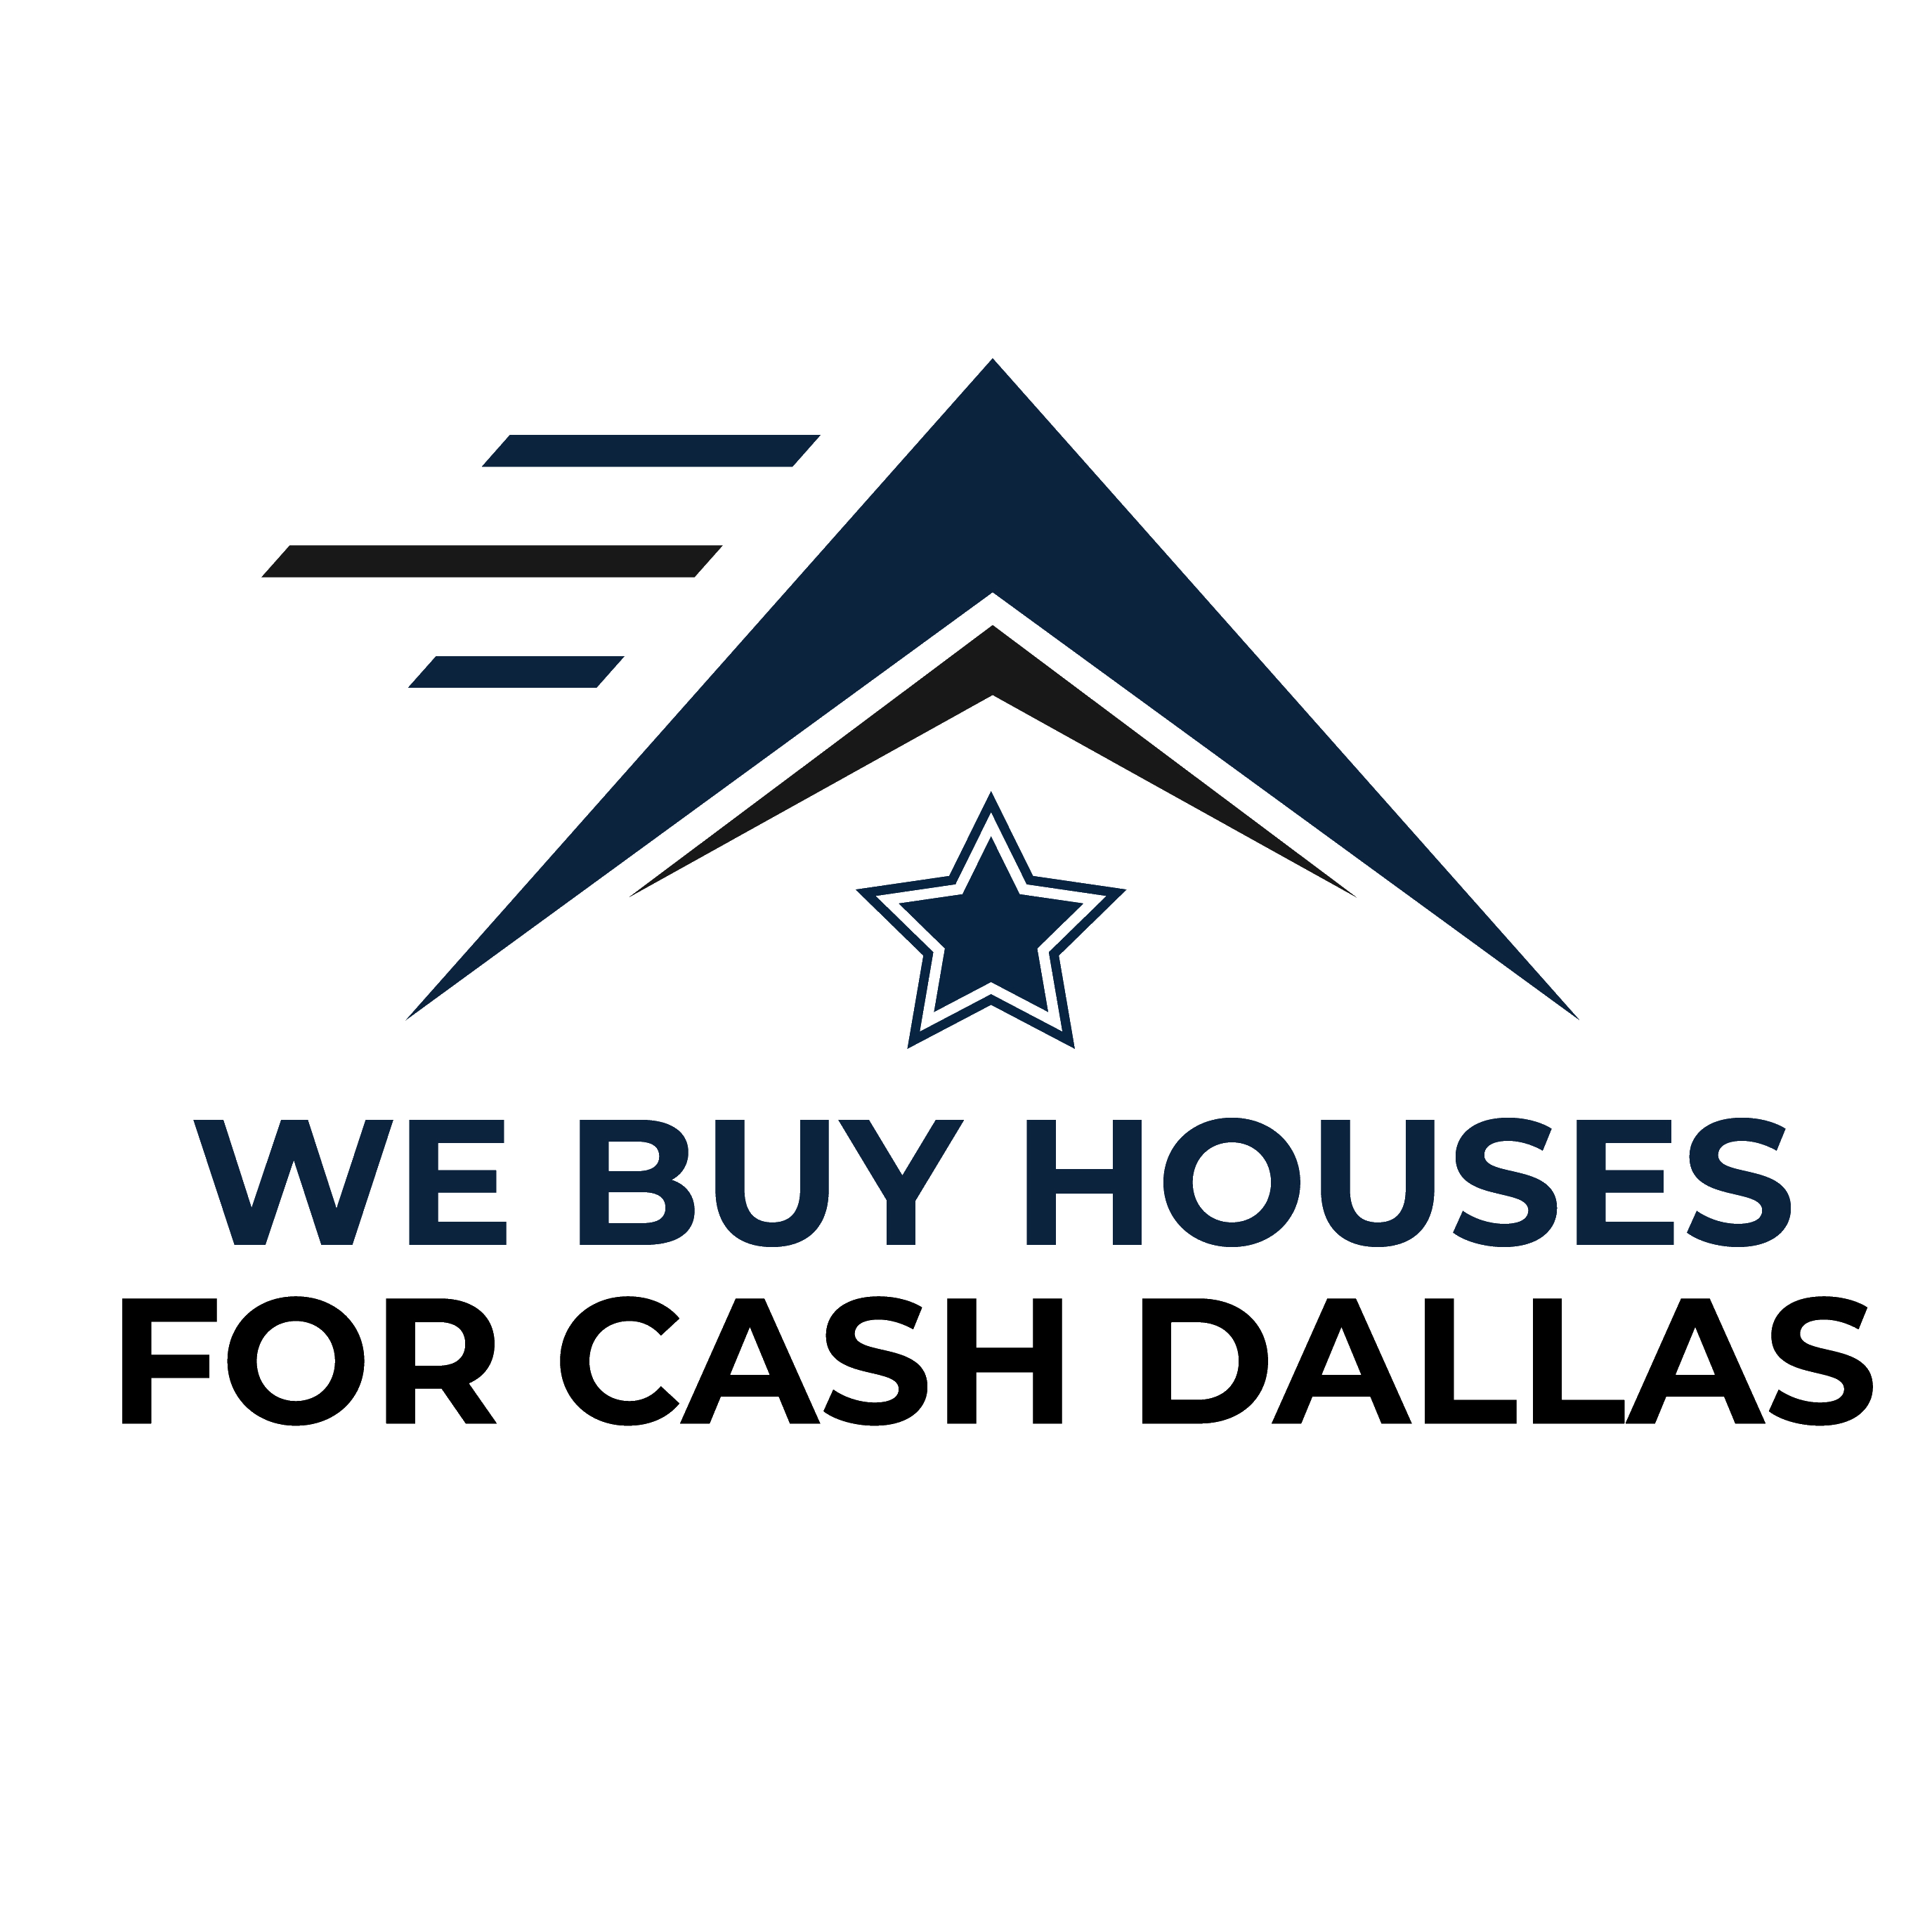 We Buy Houses For Cash Dallas logo